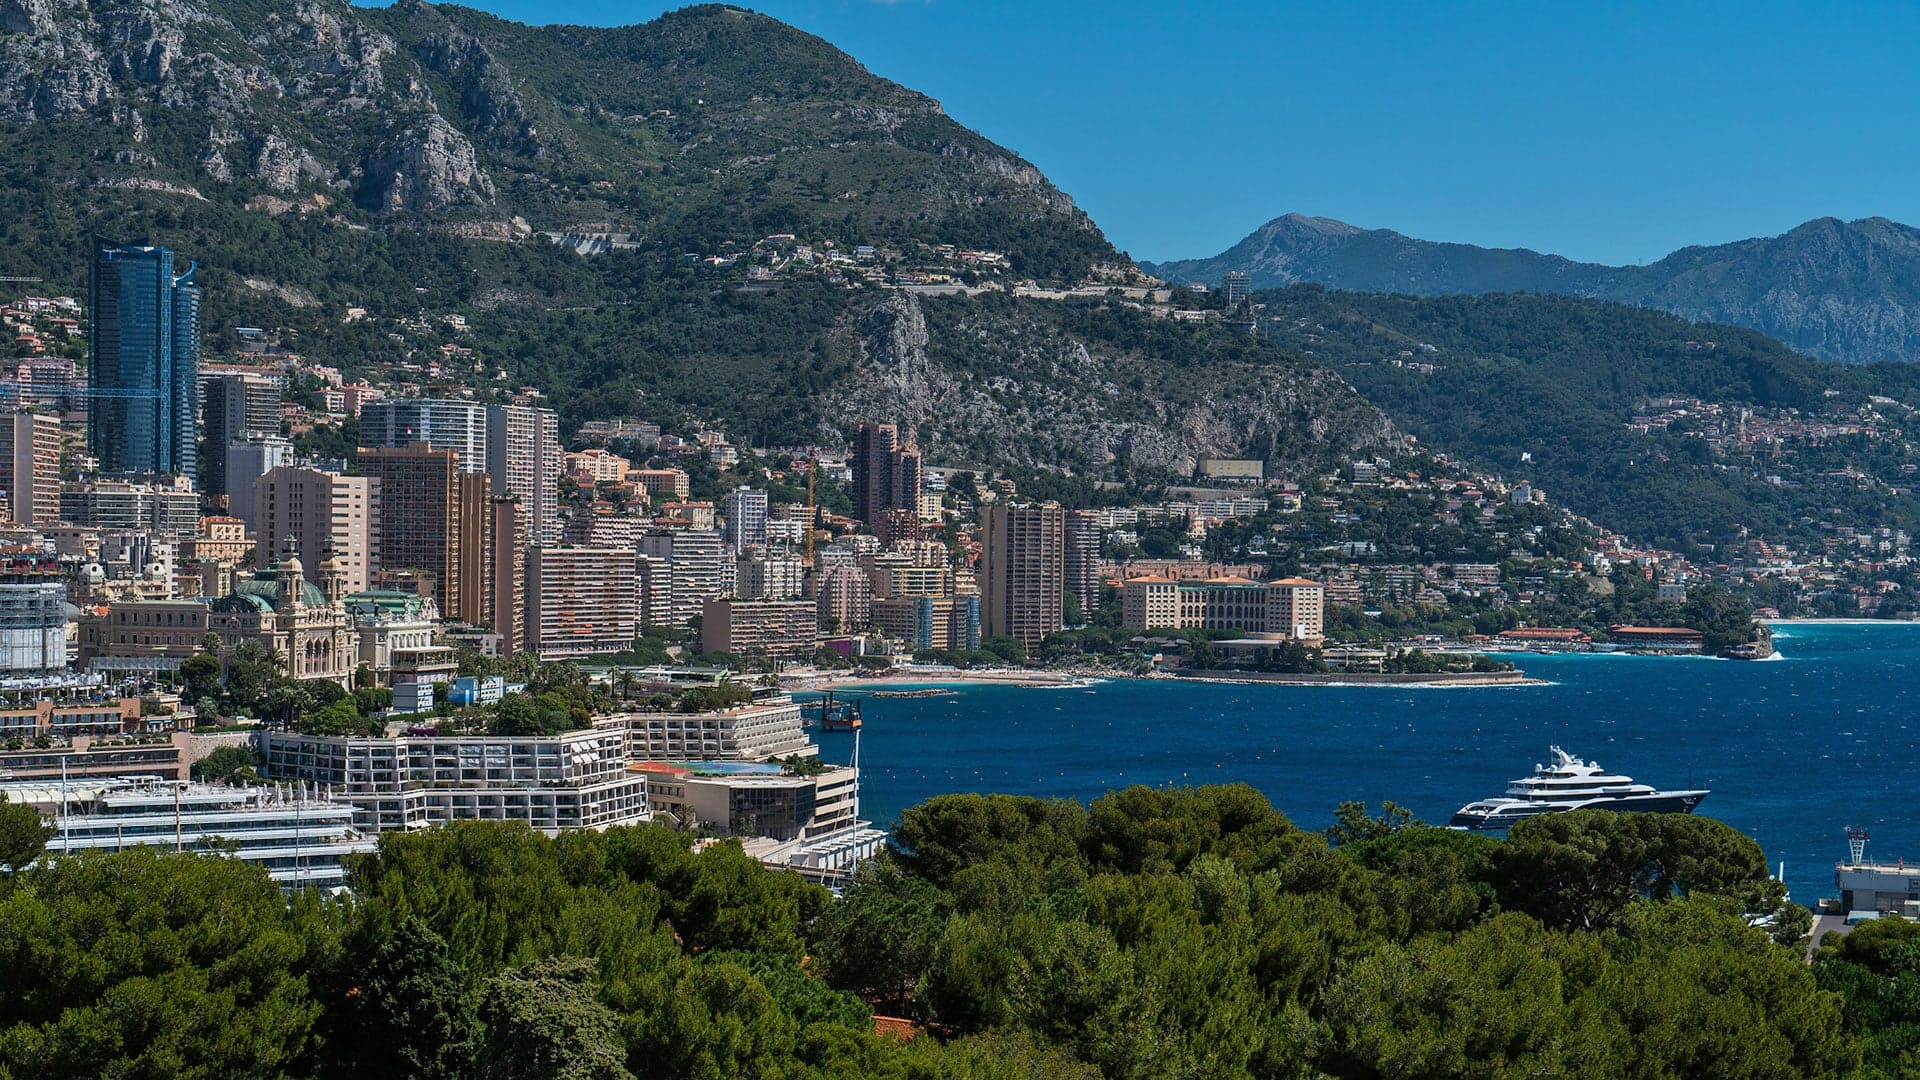 The Drive’s City Guide to Monaco